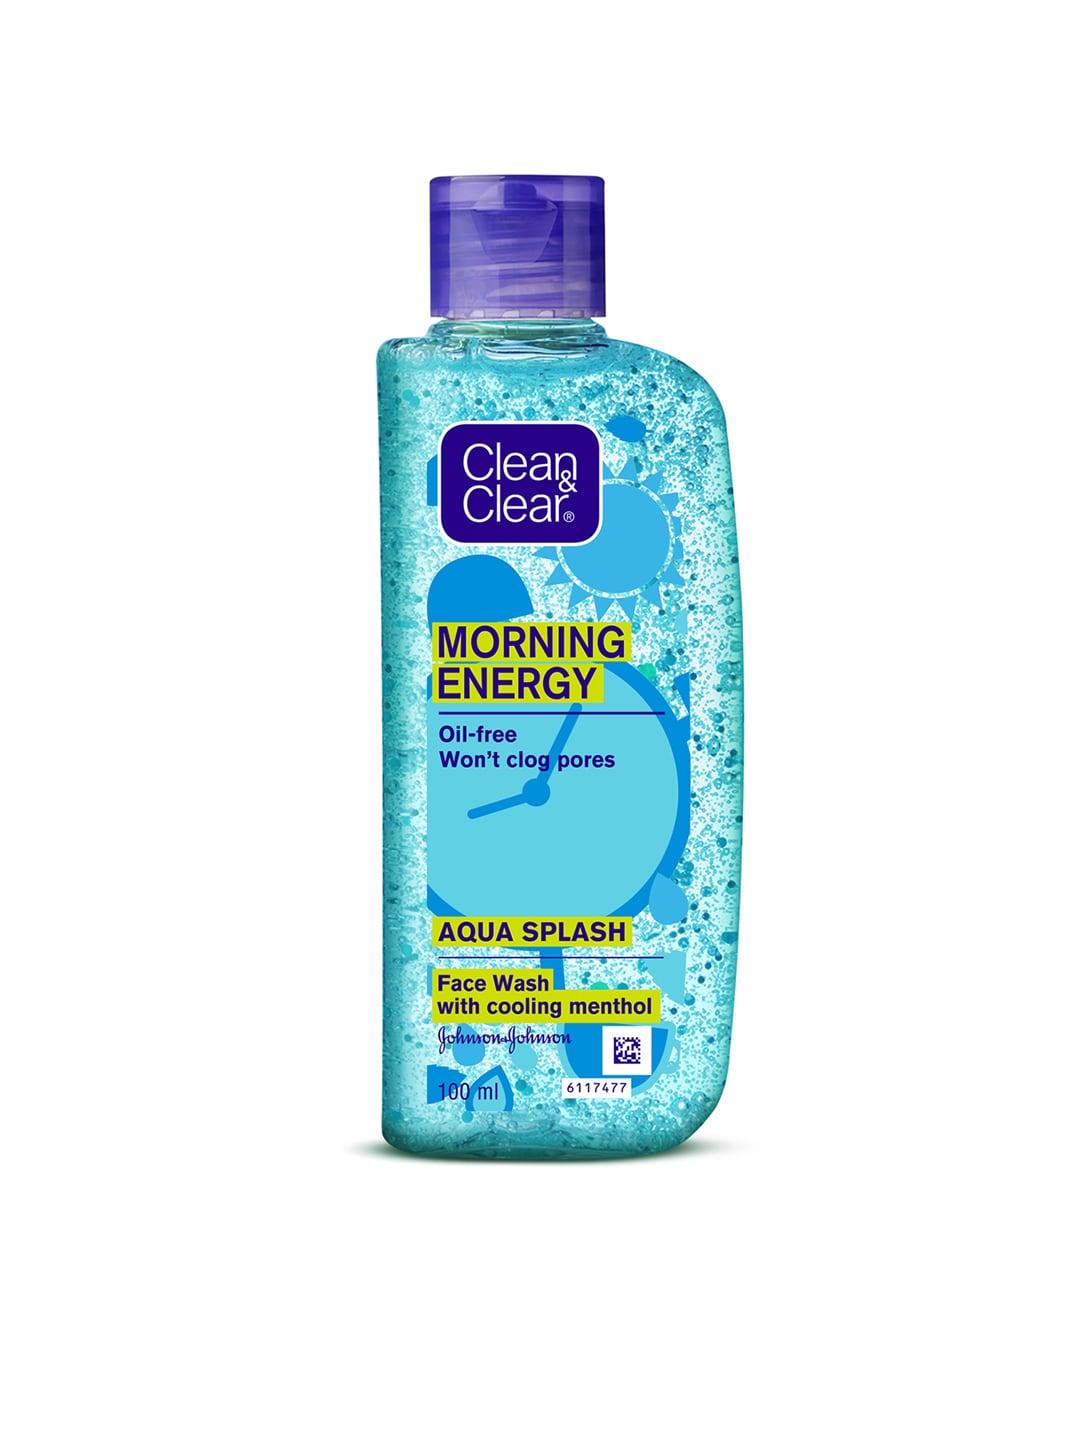 Clean&Clear Morning Energy Oil Free Aqua Splash Face Wash - 100 ml